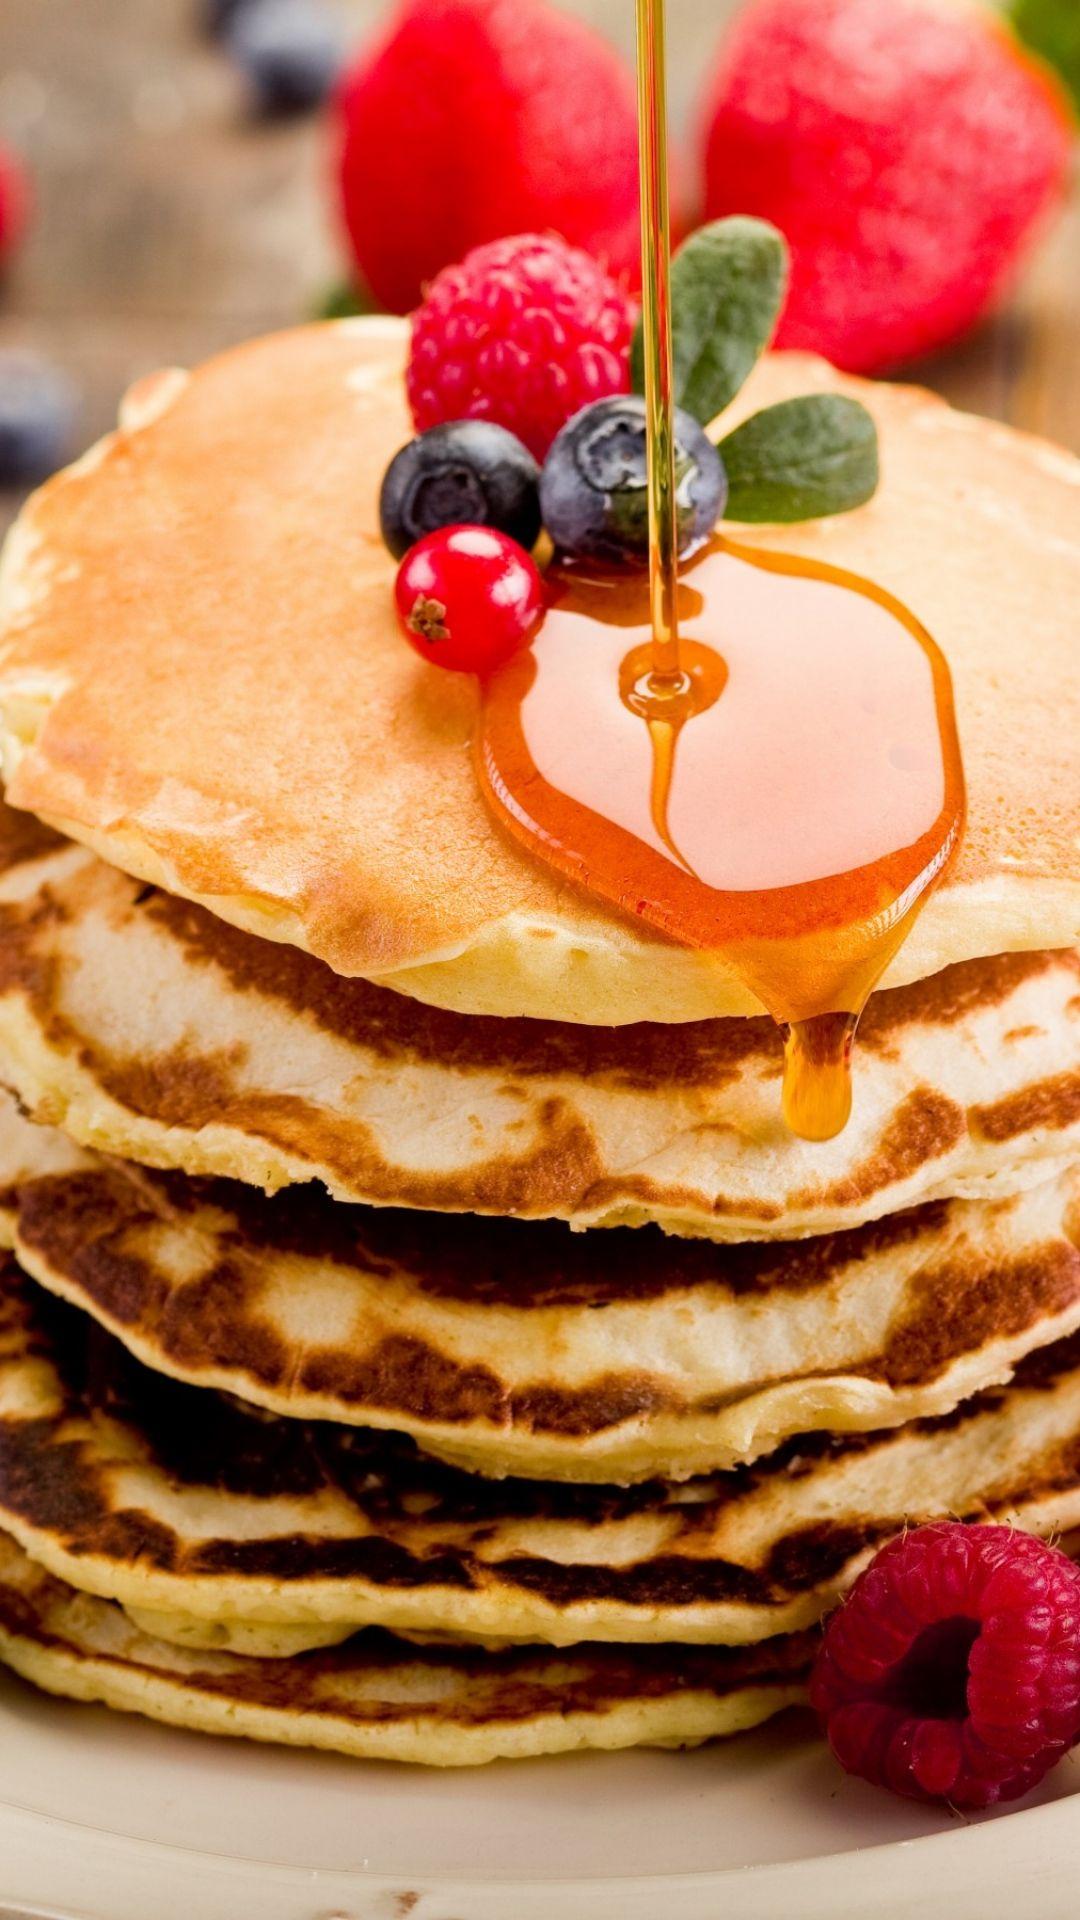 Pancake to see more #yummy #food wallpaper